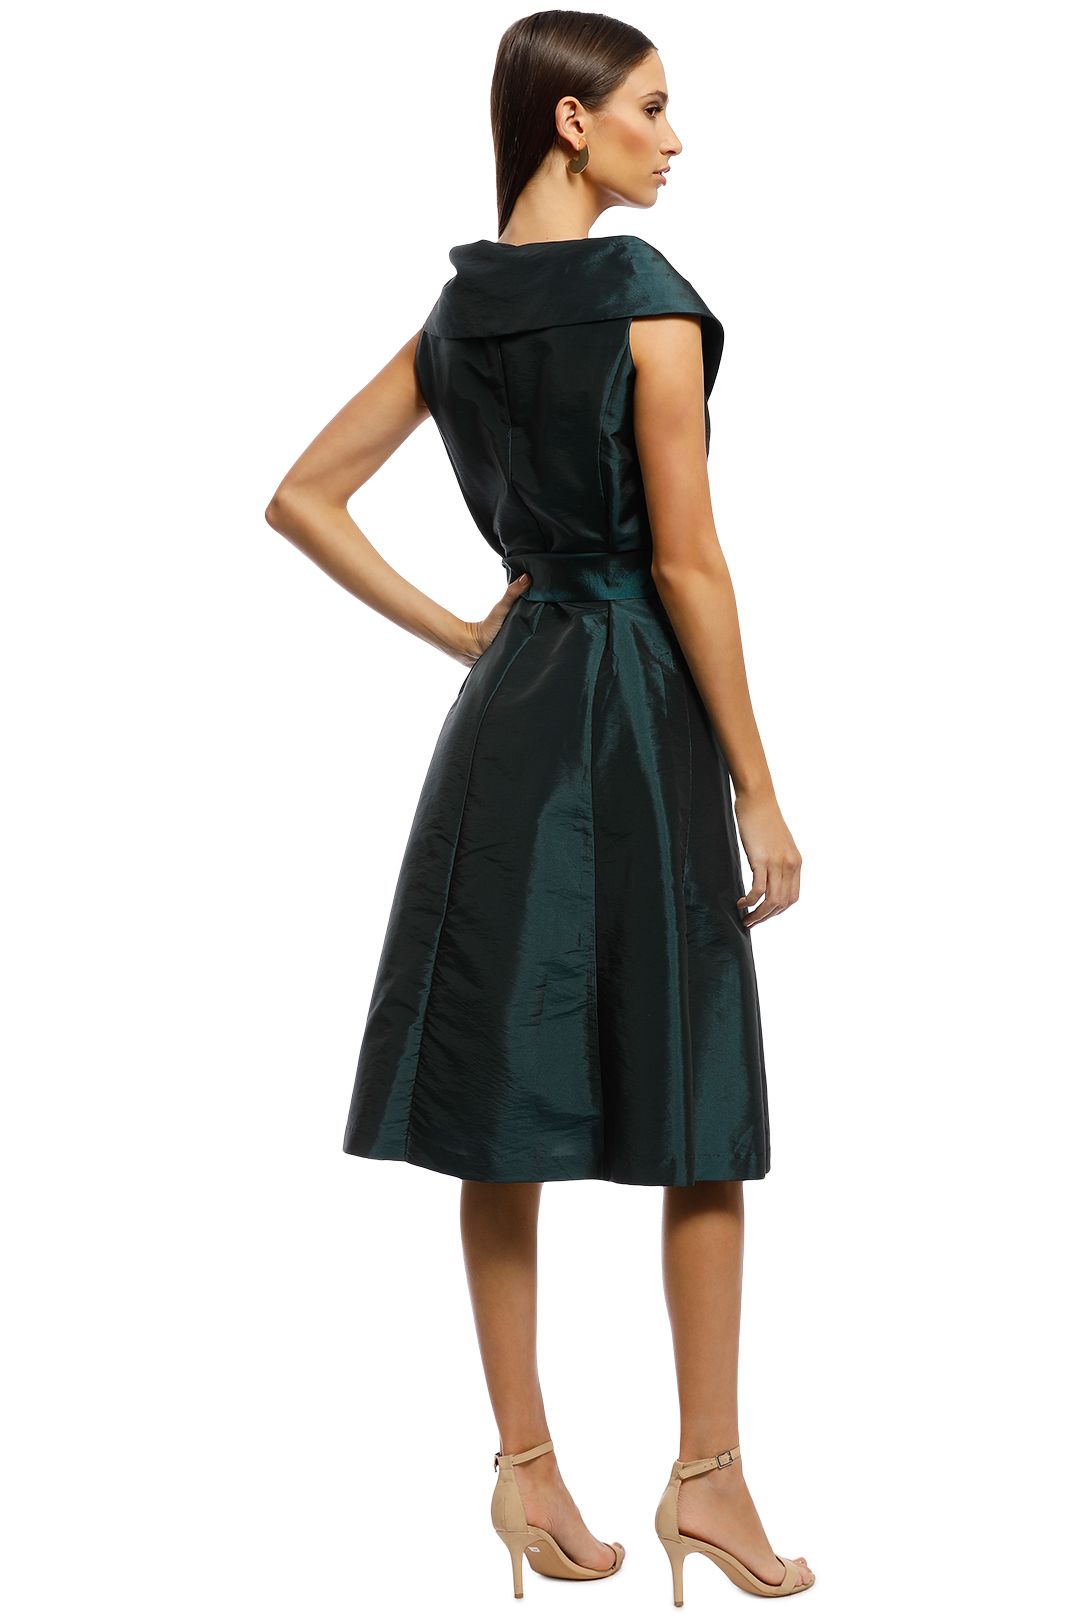 Montique - Valini Tafetta Dress - Emerald - Back